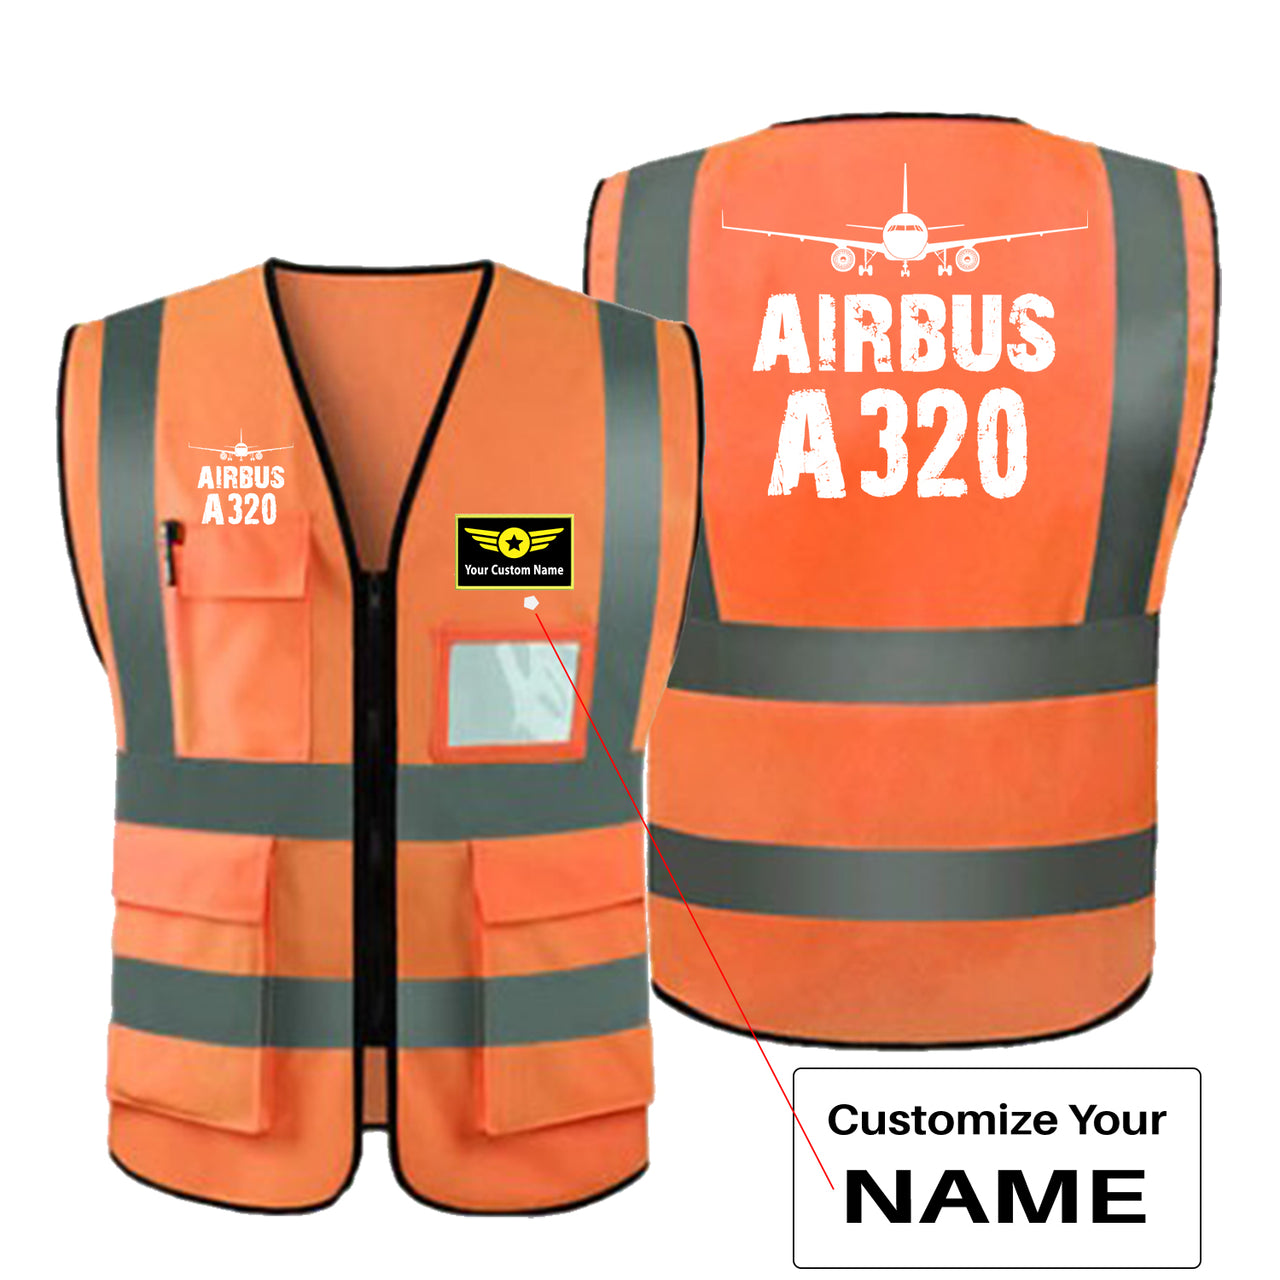 Airbus A320 & Plane Designed Reflective Vests